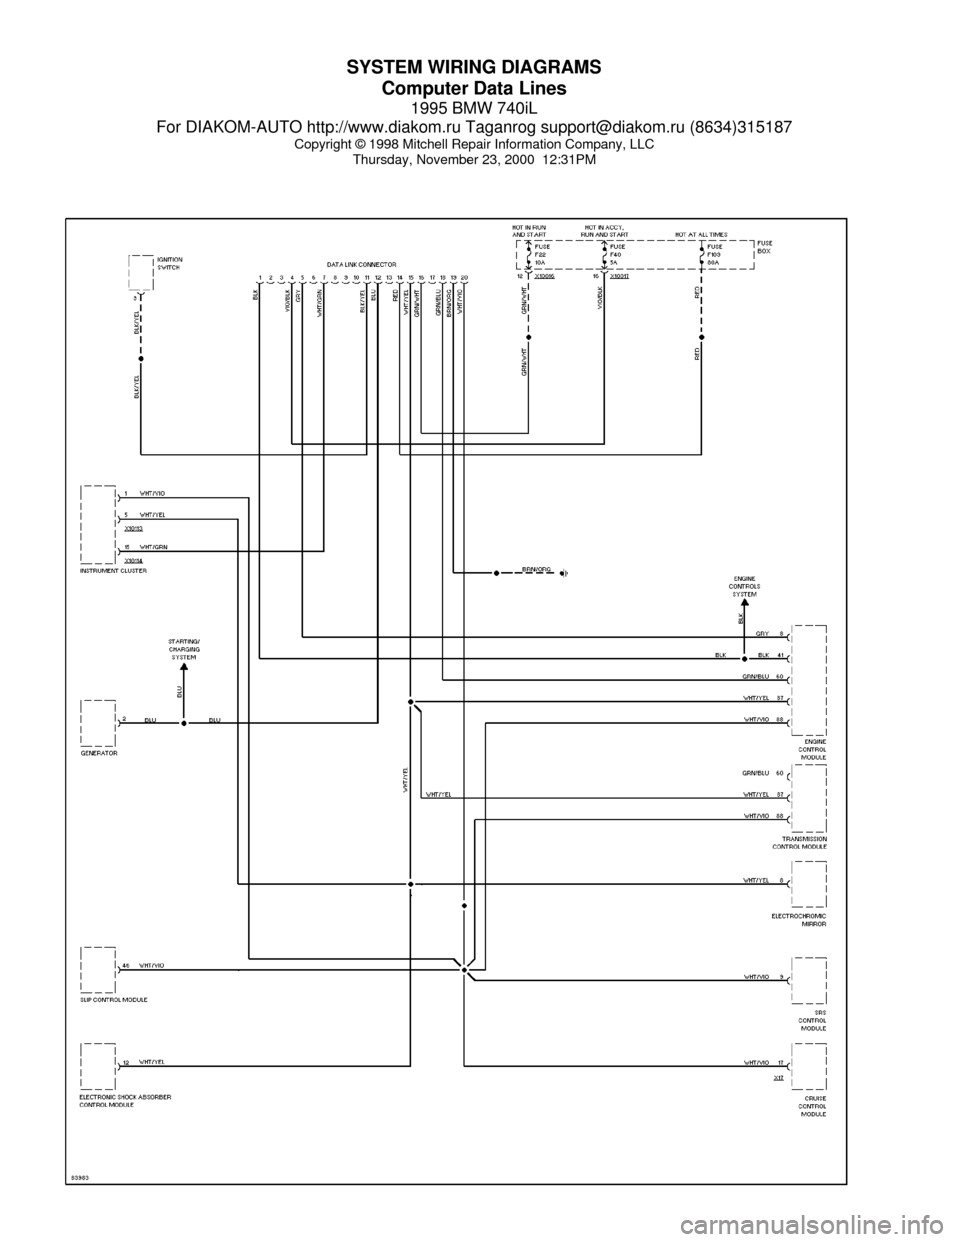 BMW 740il 1995 E38 System Wiring Diagrams SYSTEM WIRING DIAGRAMS
Computer Data Lines
1995 BMW 740iL
For DIAKOM-AUTO http://www.diakom.ru Taganrog support@diakom.ru (8634)315187
Copyright © 1998 Mitchell Repair Information Company, LLC
Thursd